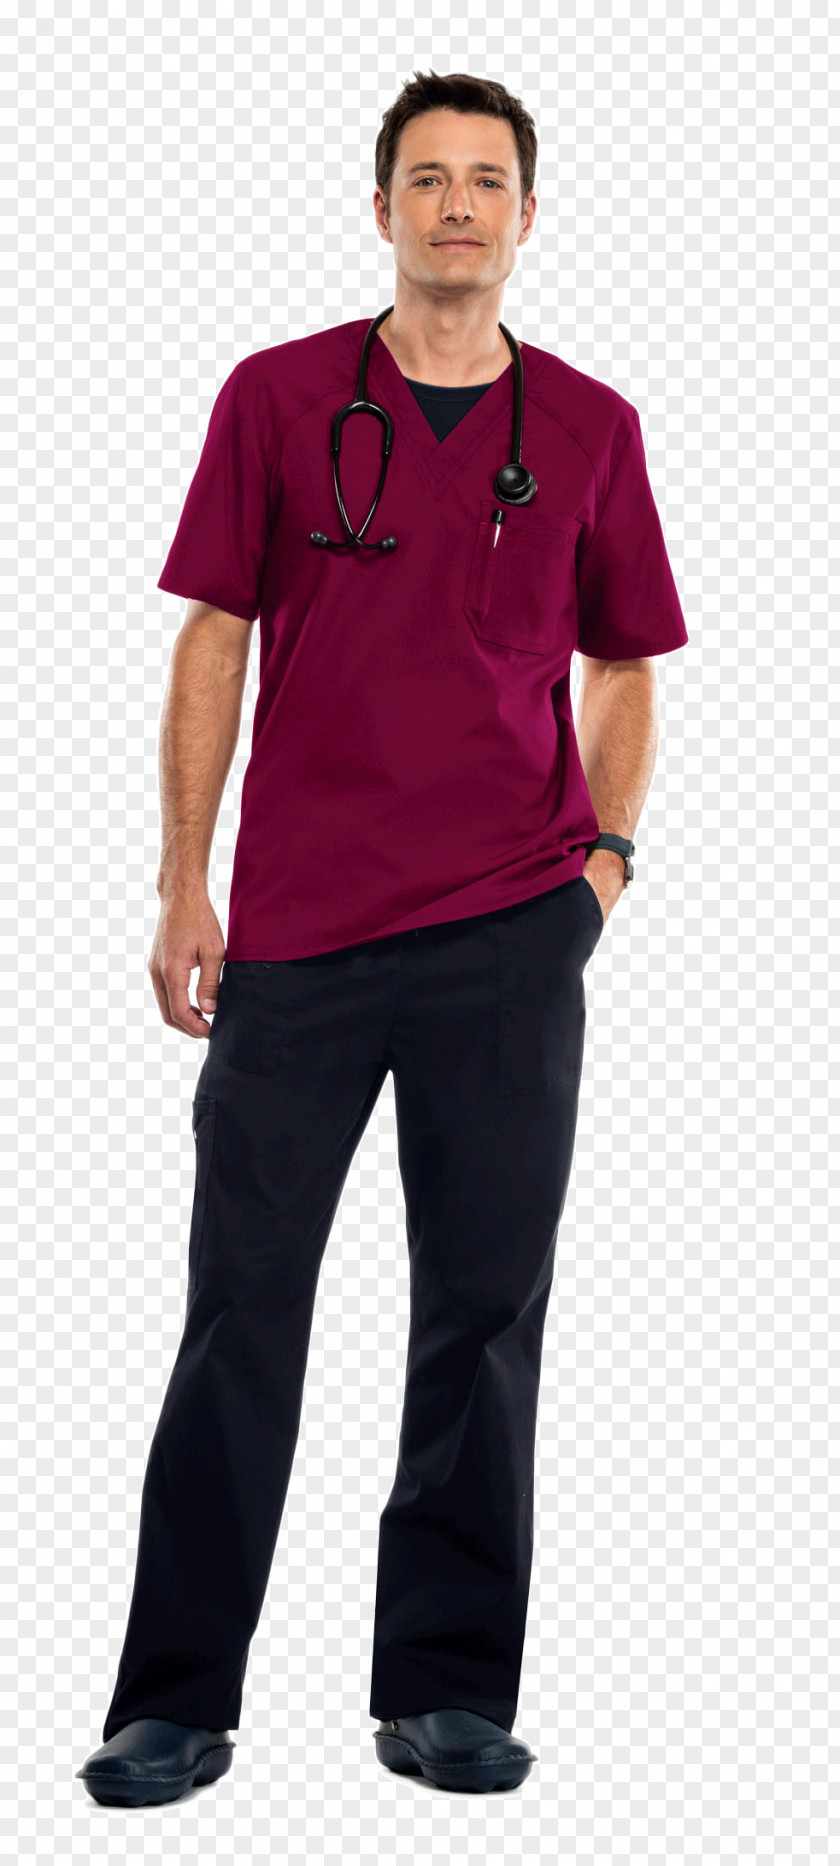 Male Nurse Scrubs T-shirt Hoodie Clothing Top PNG